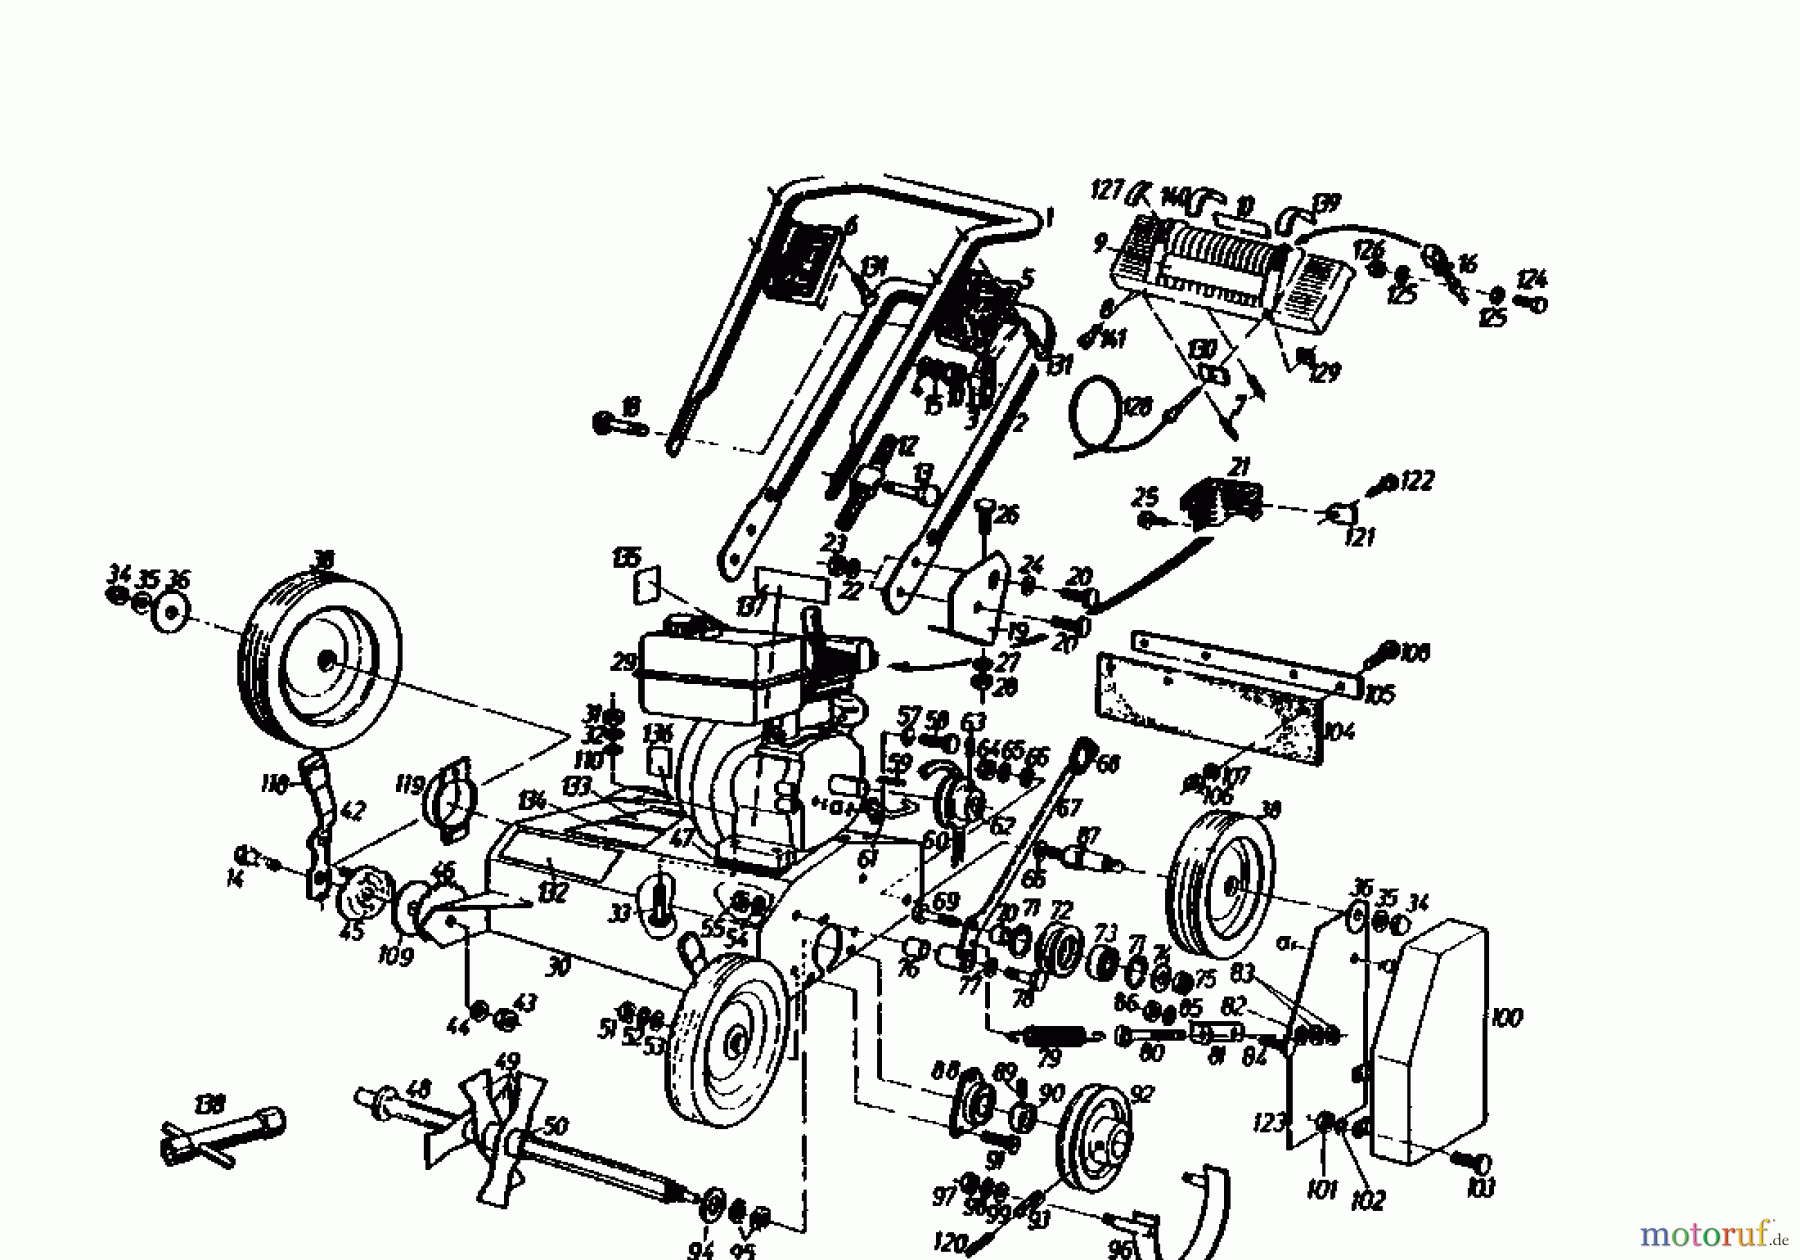  Gutbrod Petrol verticutter MV 504 00053.03  (1991) Basic machine